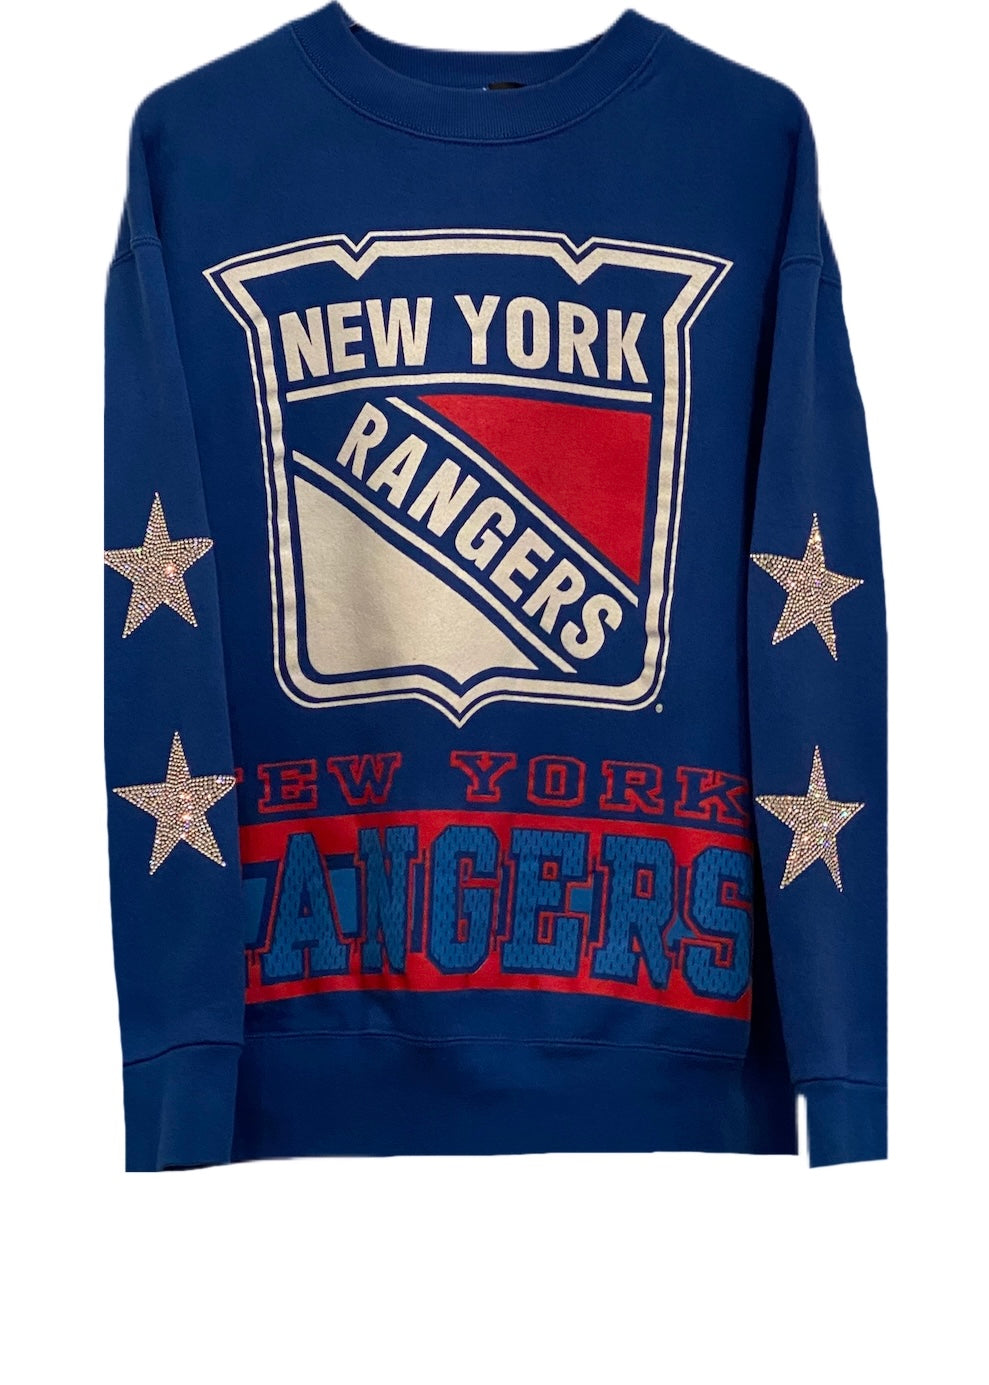 New York Rangers, NHL One of a KIND Vintage Sweatshirt with Crystal Stars Design